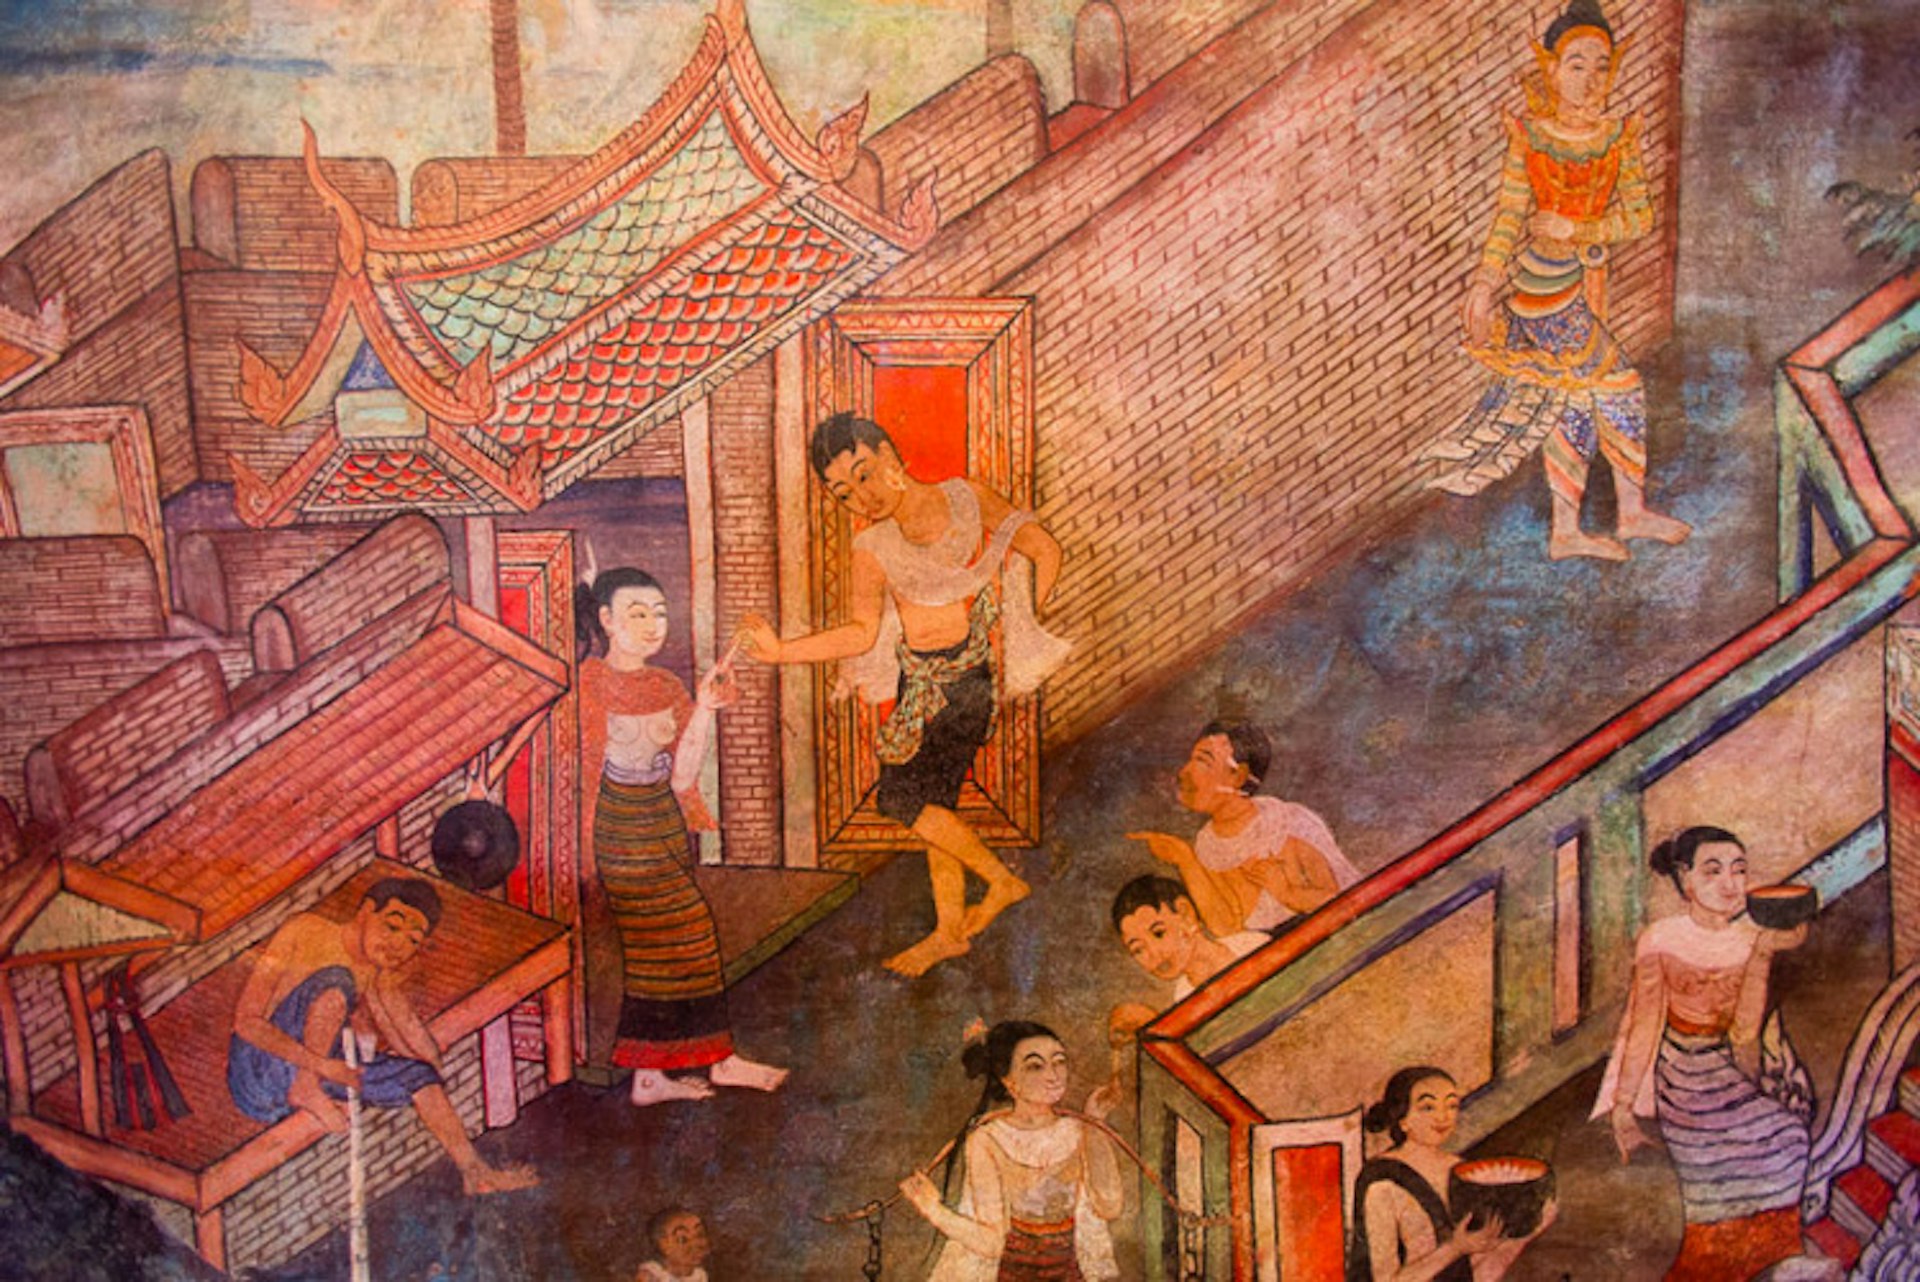 The 19th century Buddhist murals at Wat Phra Singh, Chiang Mai. Image by Austin Bush